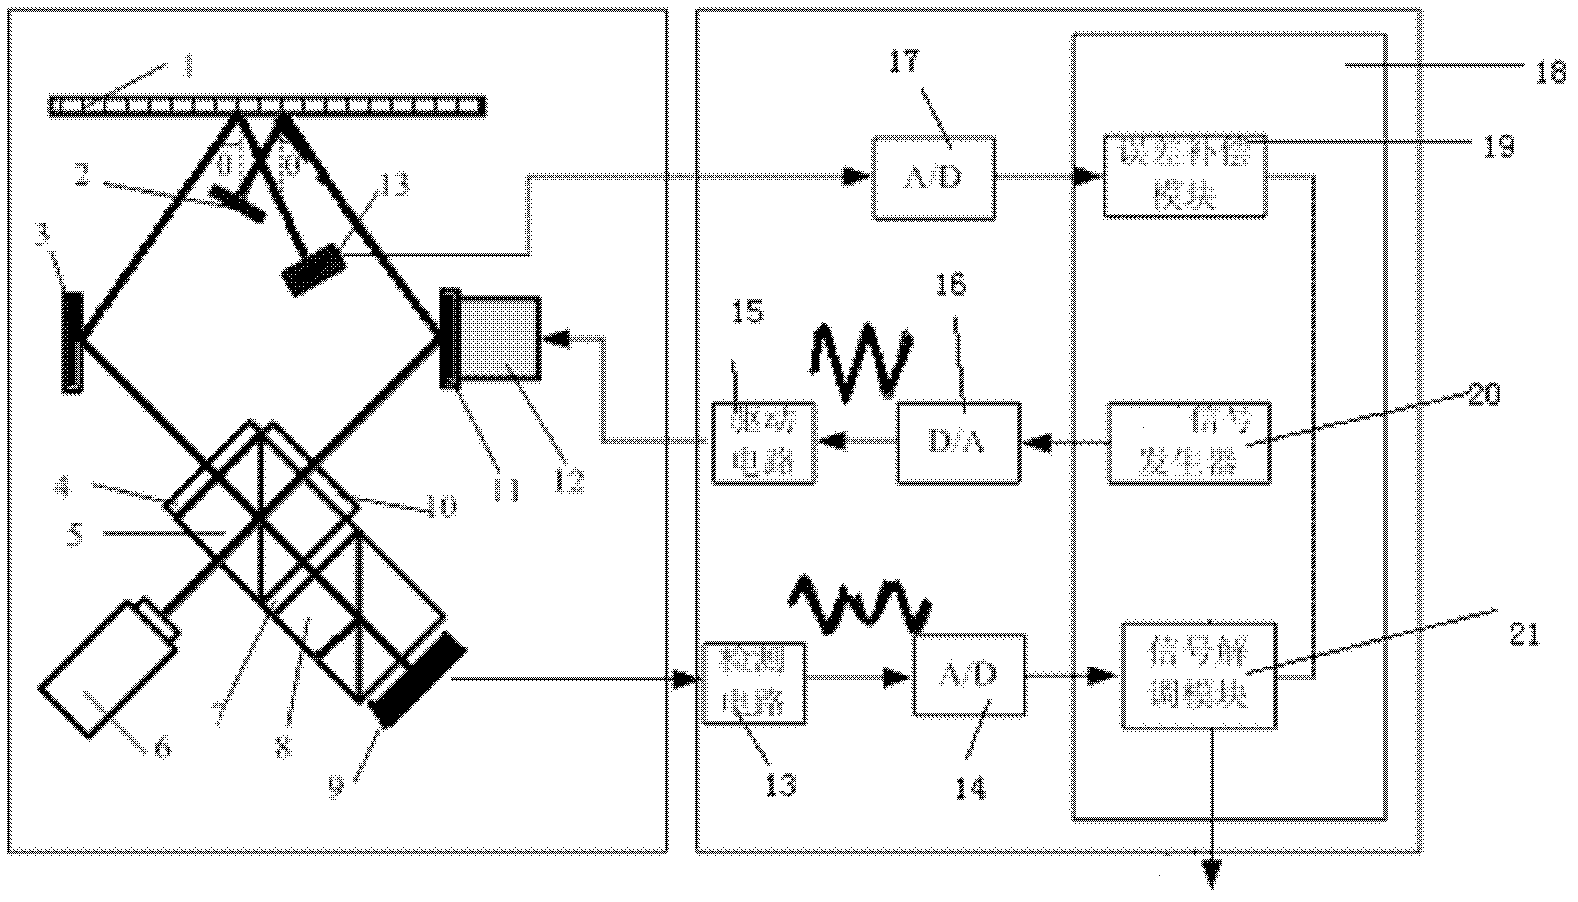 Phase modulation grating sensor and method for realizing measurement